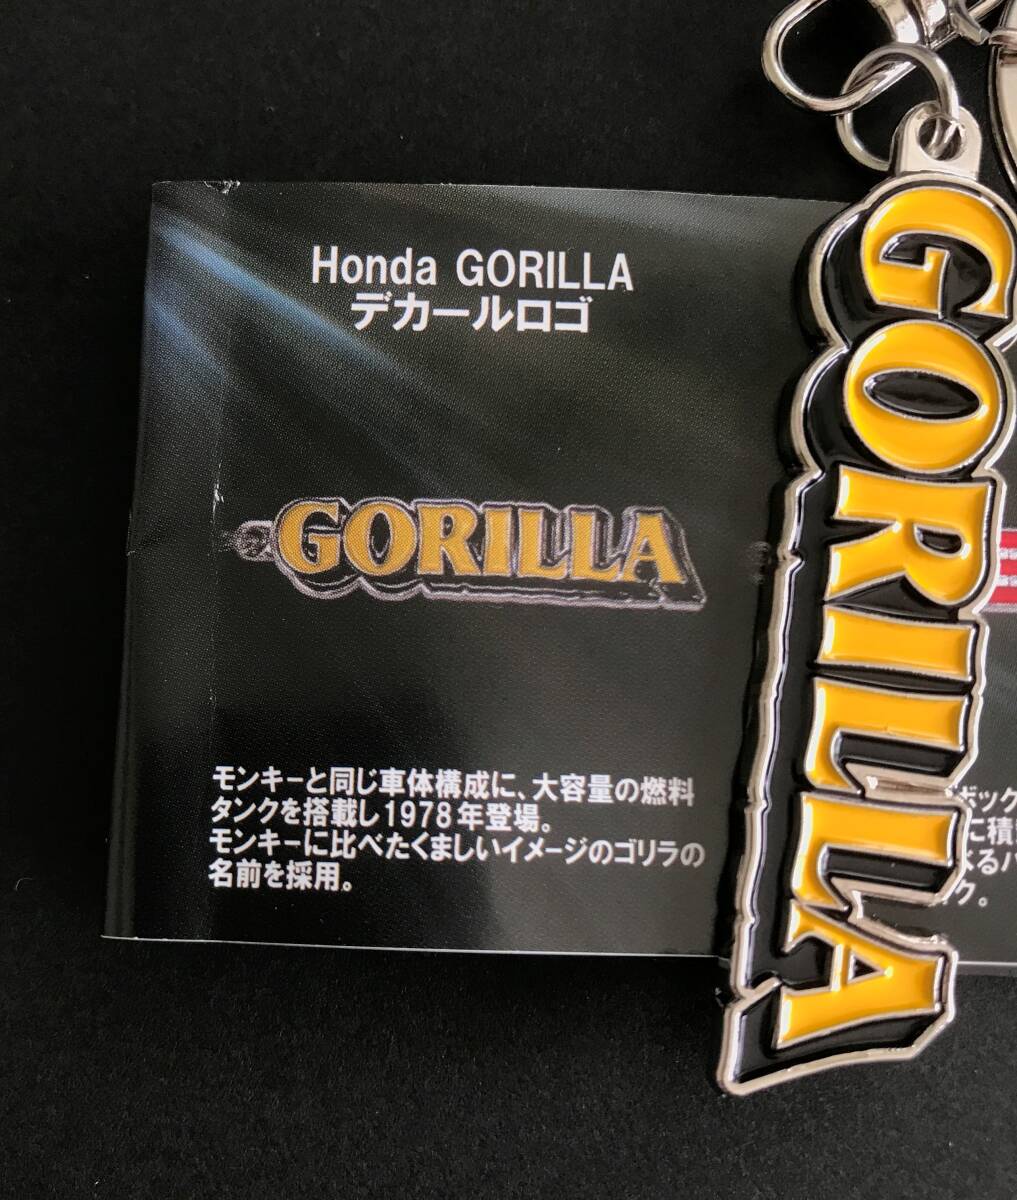 HONDA GORILLA Z50R key ring key holder parts Goods Japanese vintage motorcycle emblem キーホルダー Decal logo ホンダ ゴリラ グッズの画像4